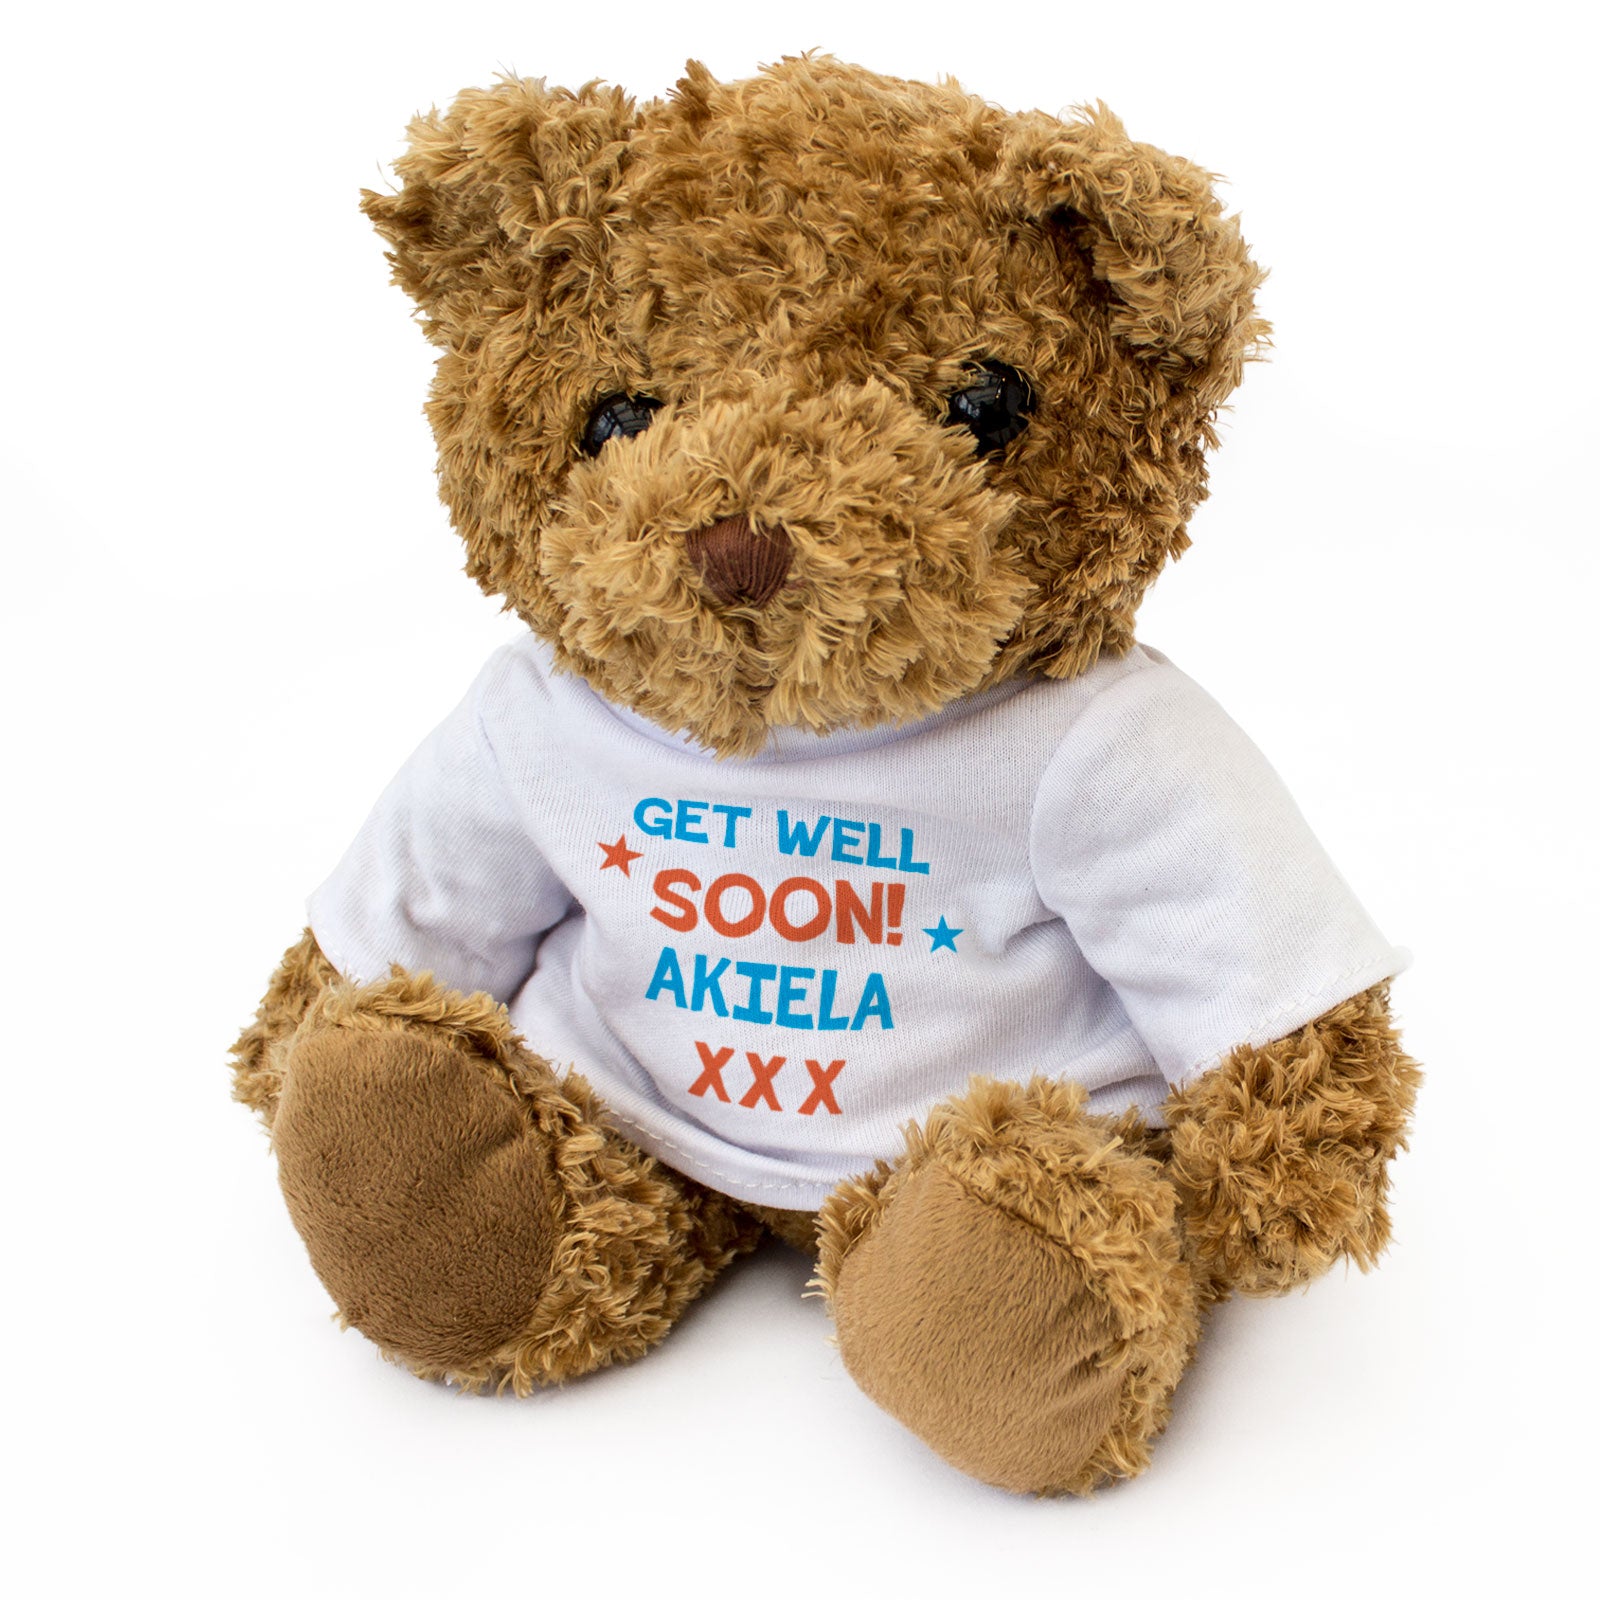 Get Well Soon Akiela - Teddy Bear